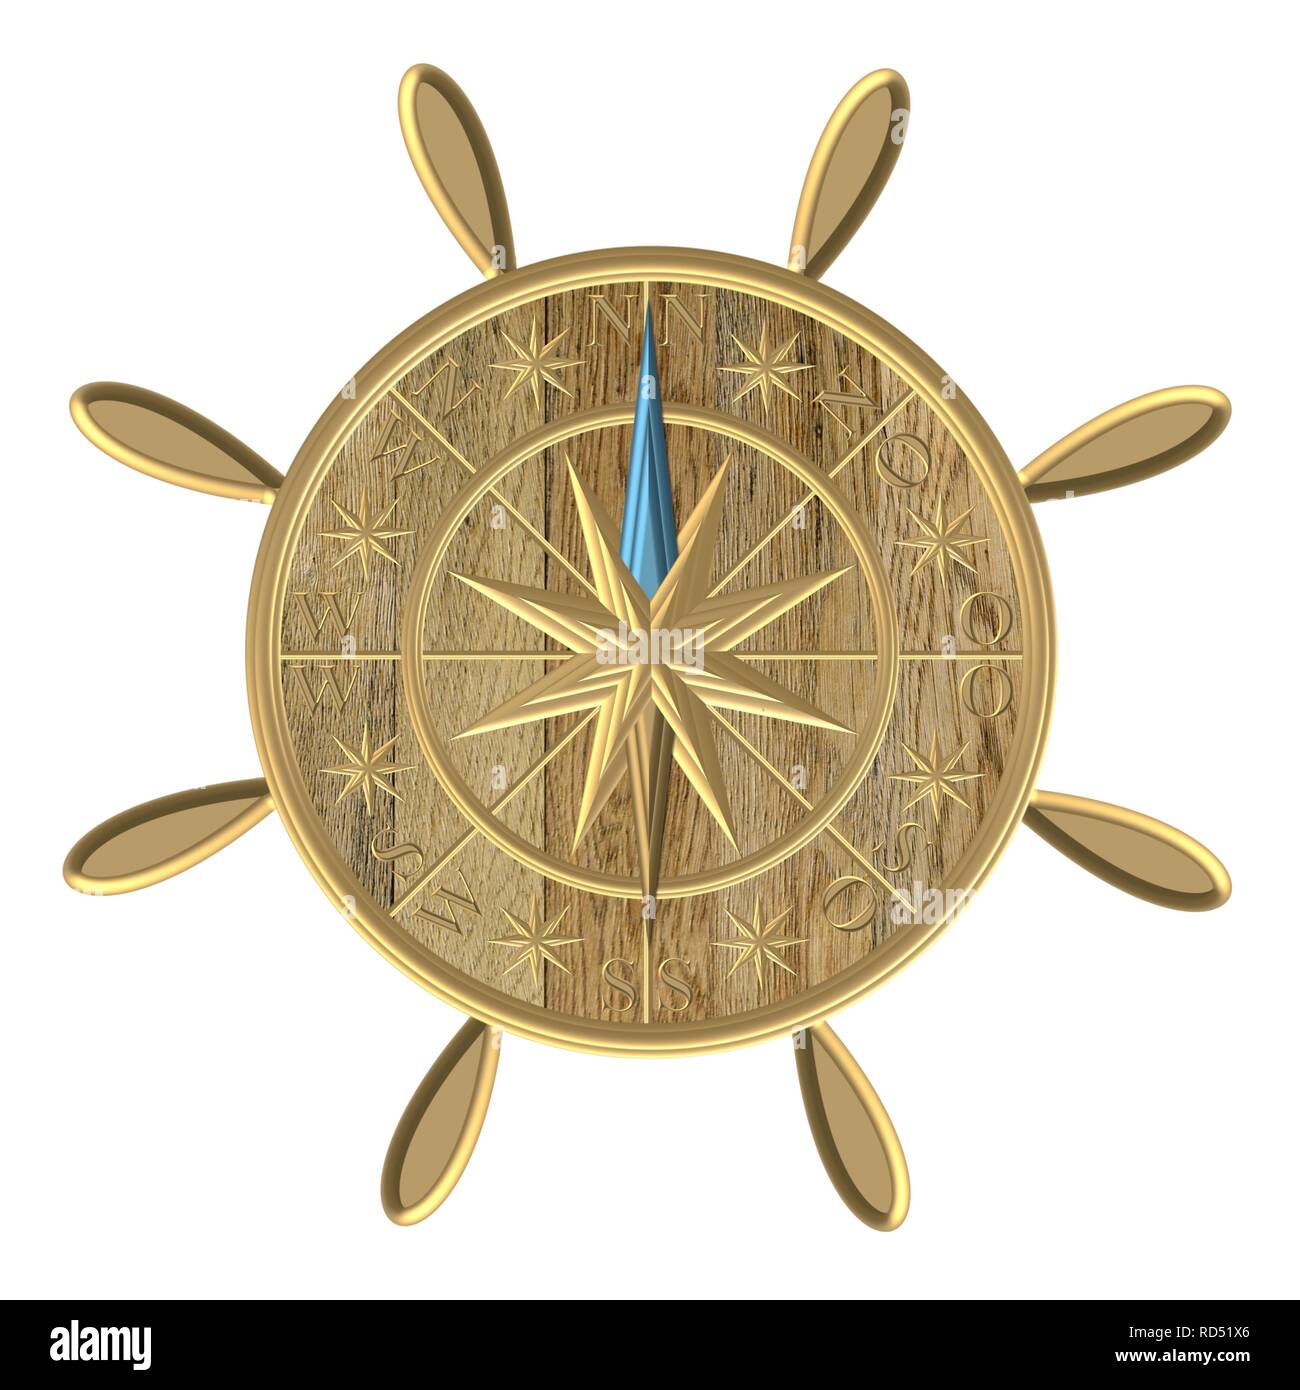 Goldener Kompass - Windrose - Steuerrad Stockfoto